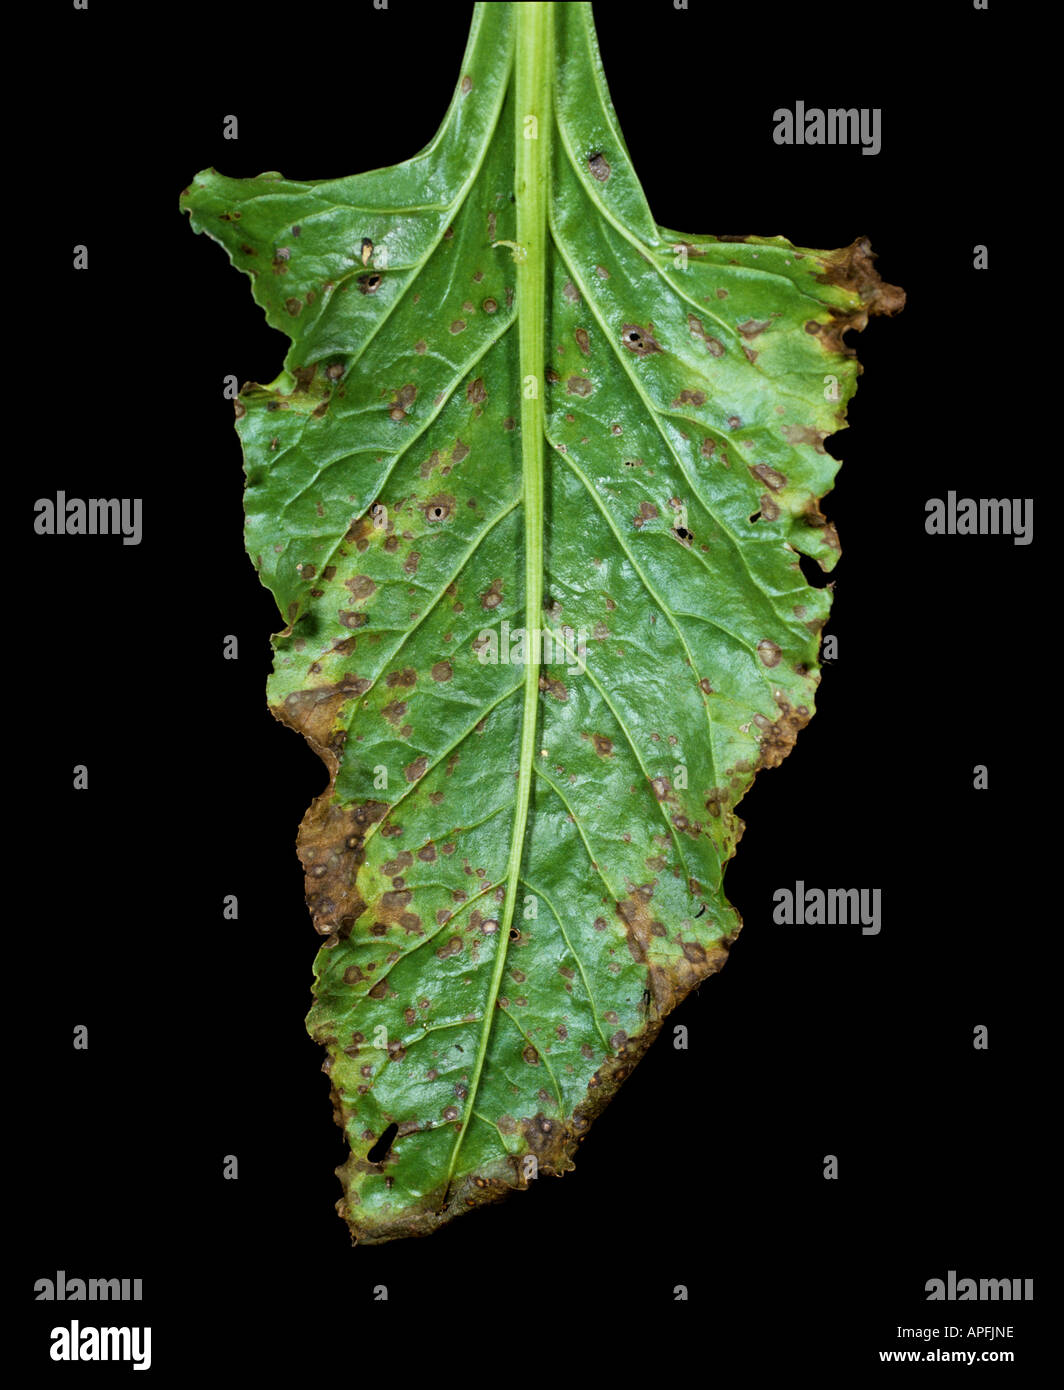 Leaf spot Cercospora beticola lesions on sugar beet leaf Stock Photo